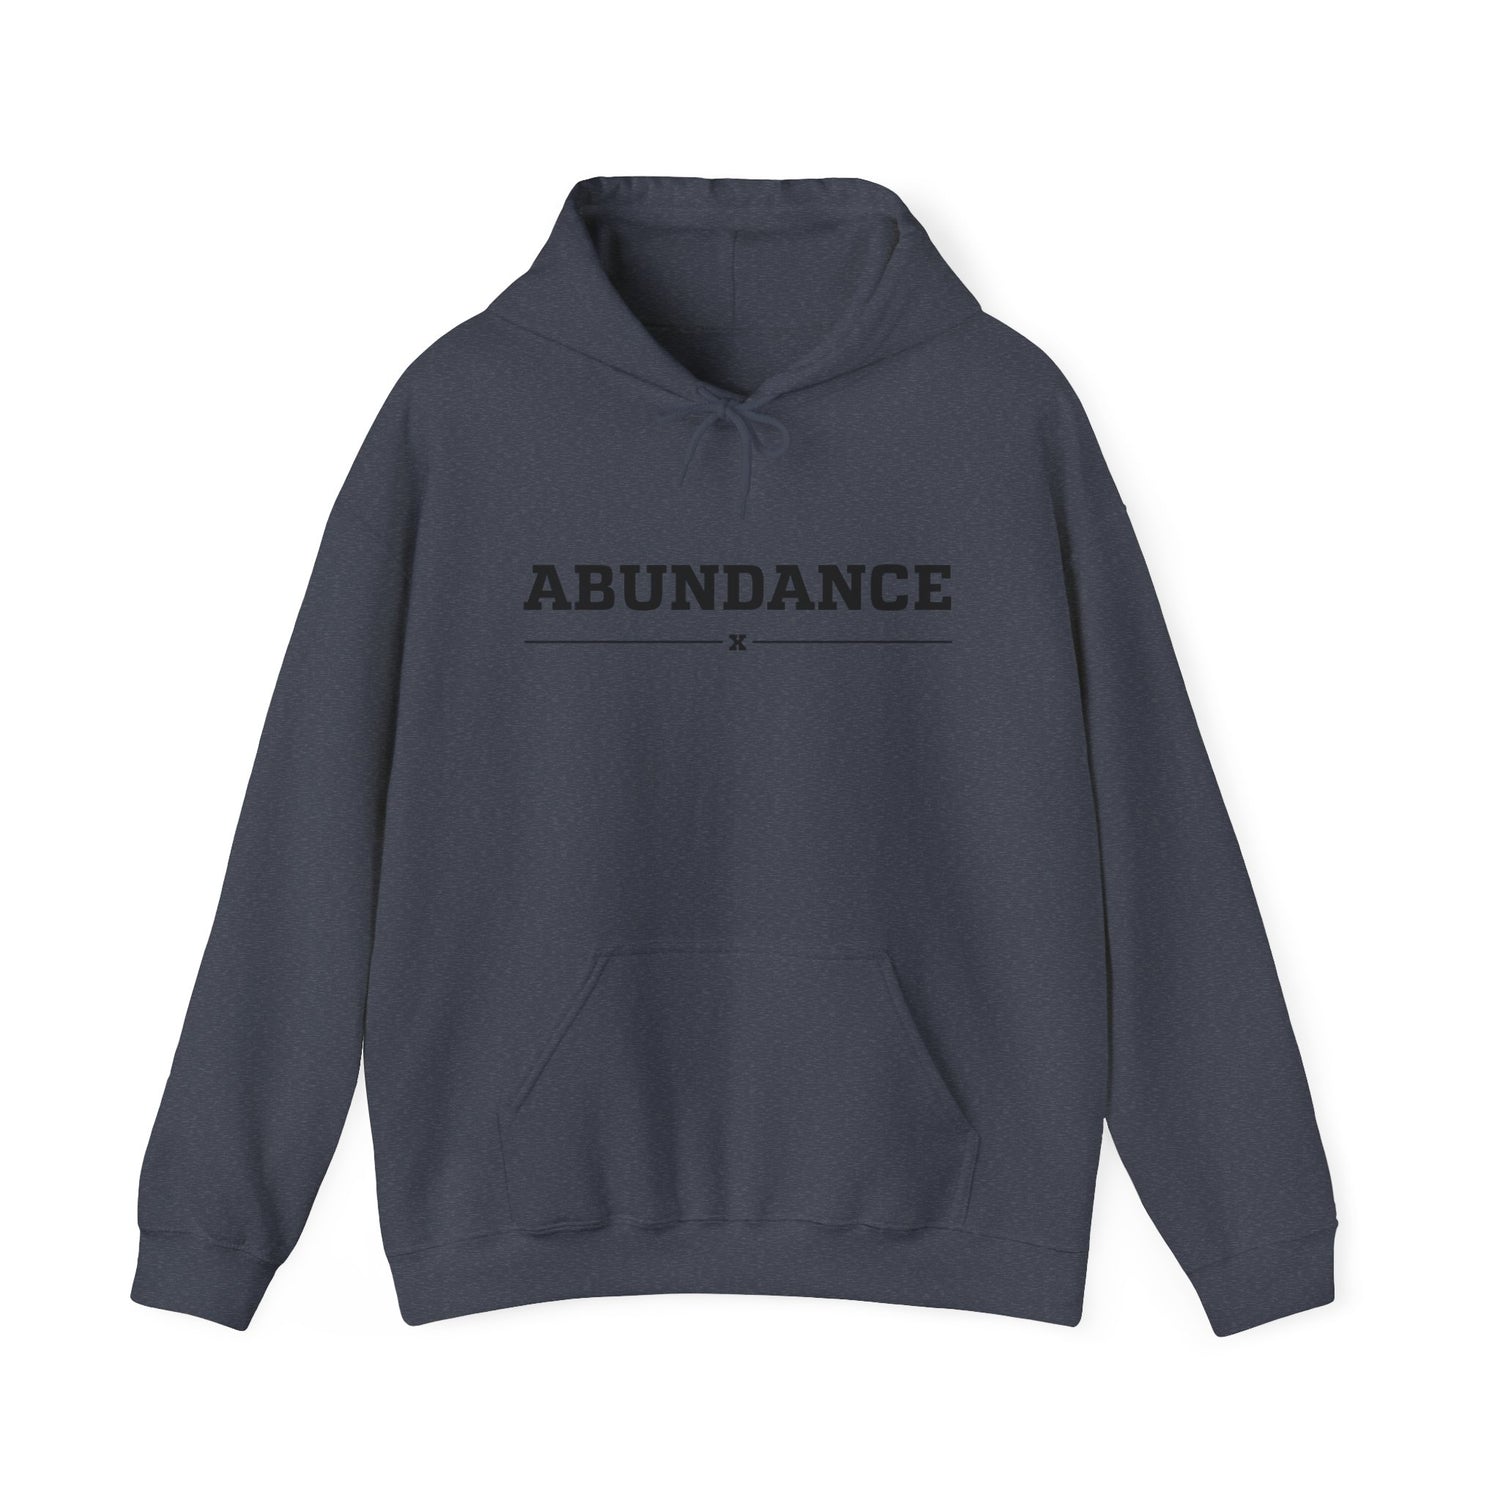 Abundance Hoodie